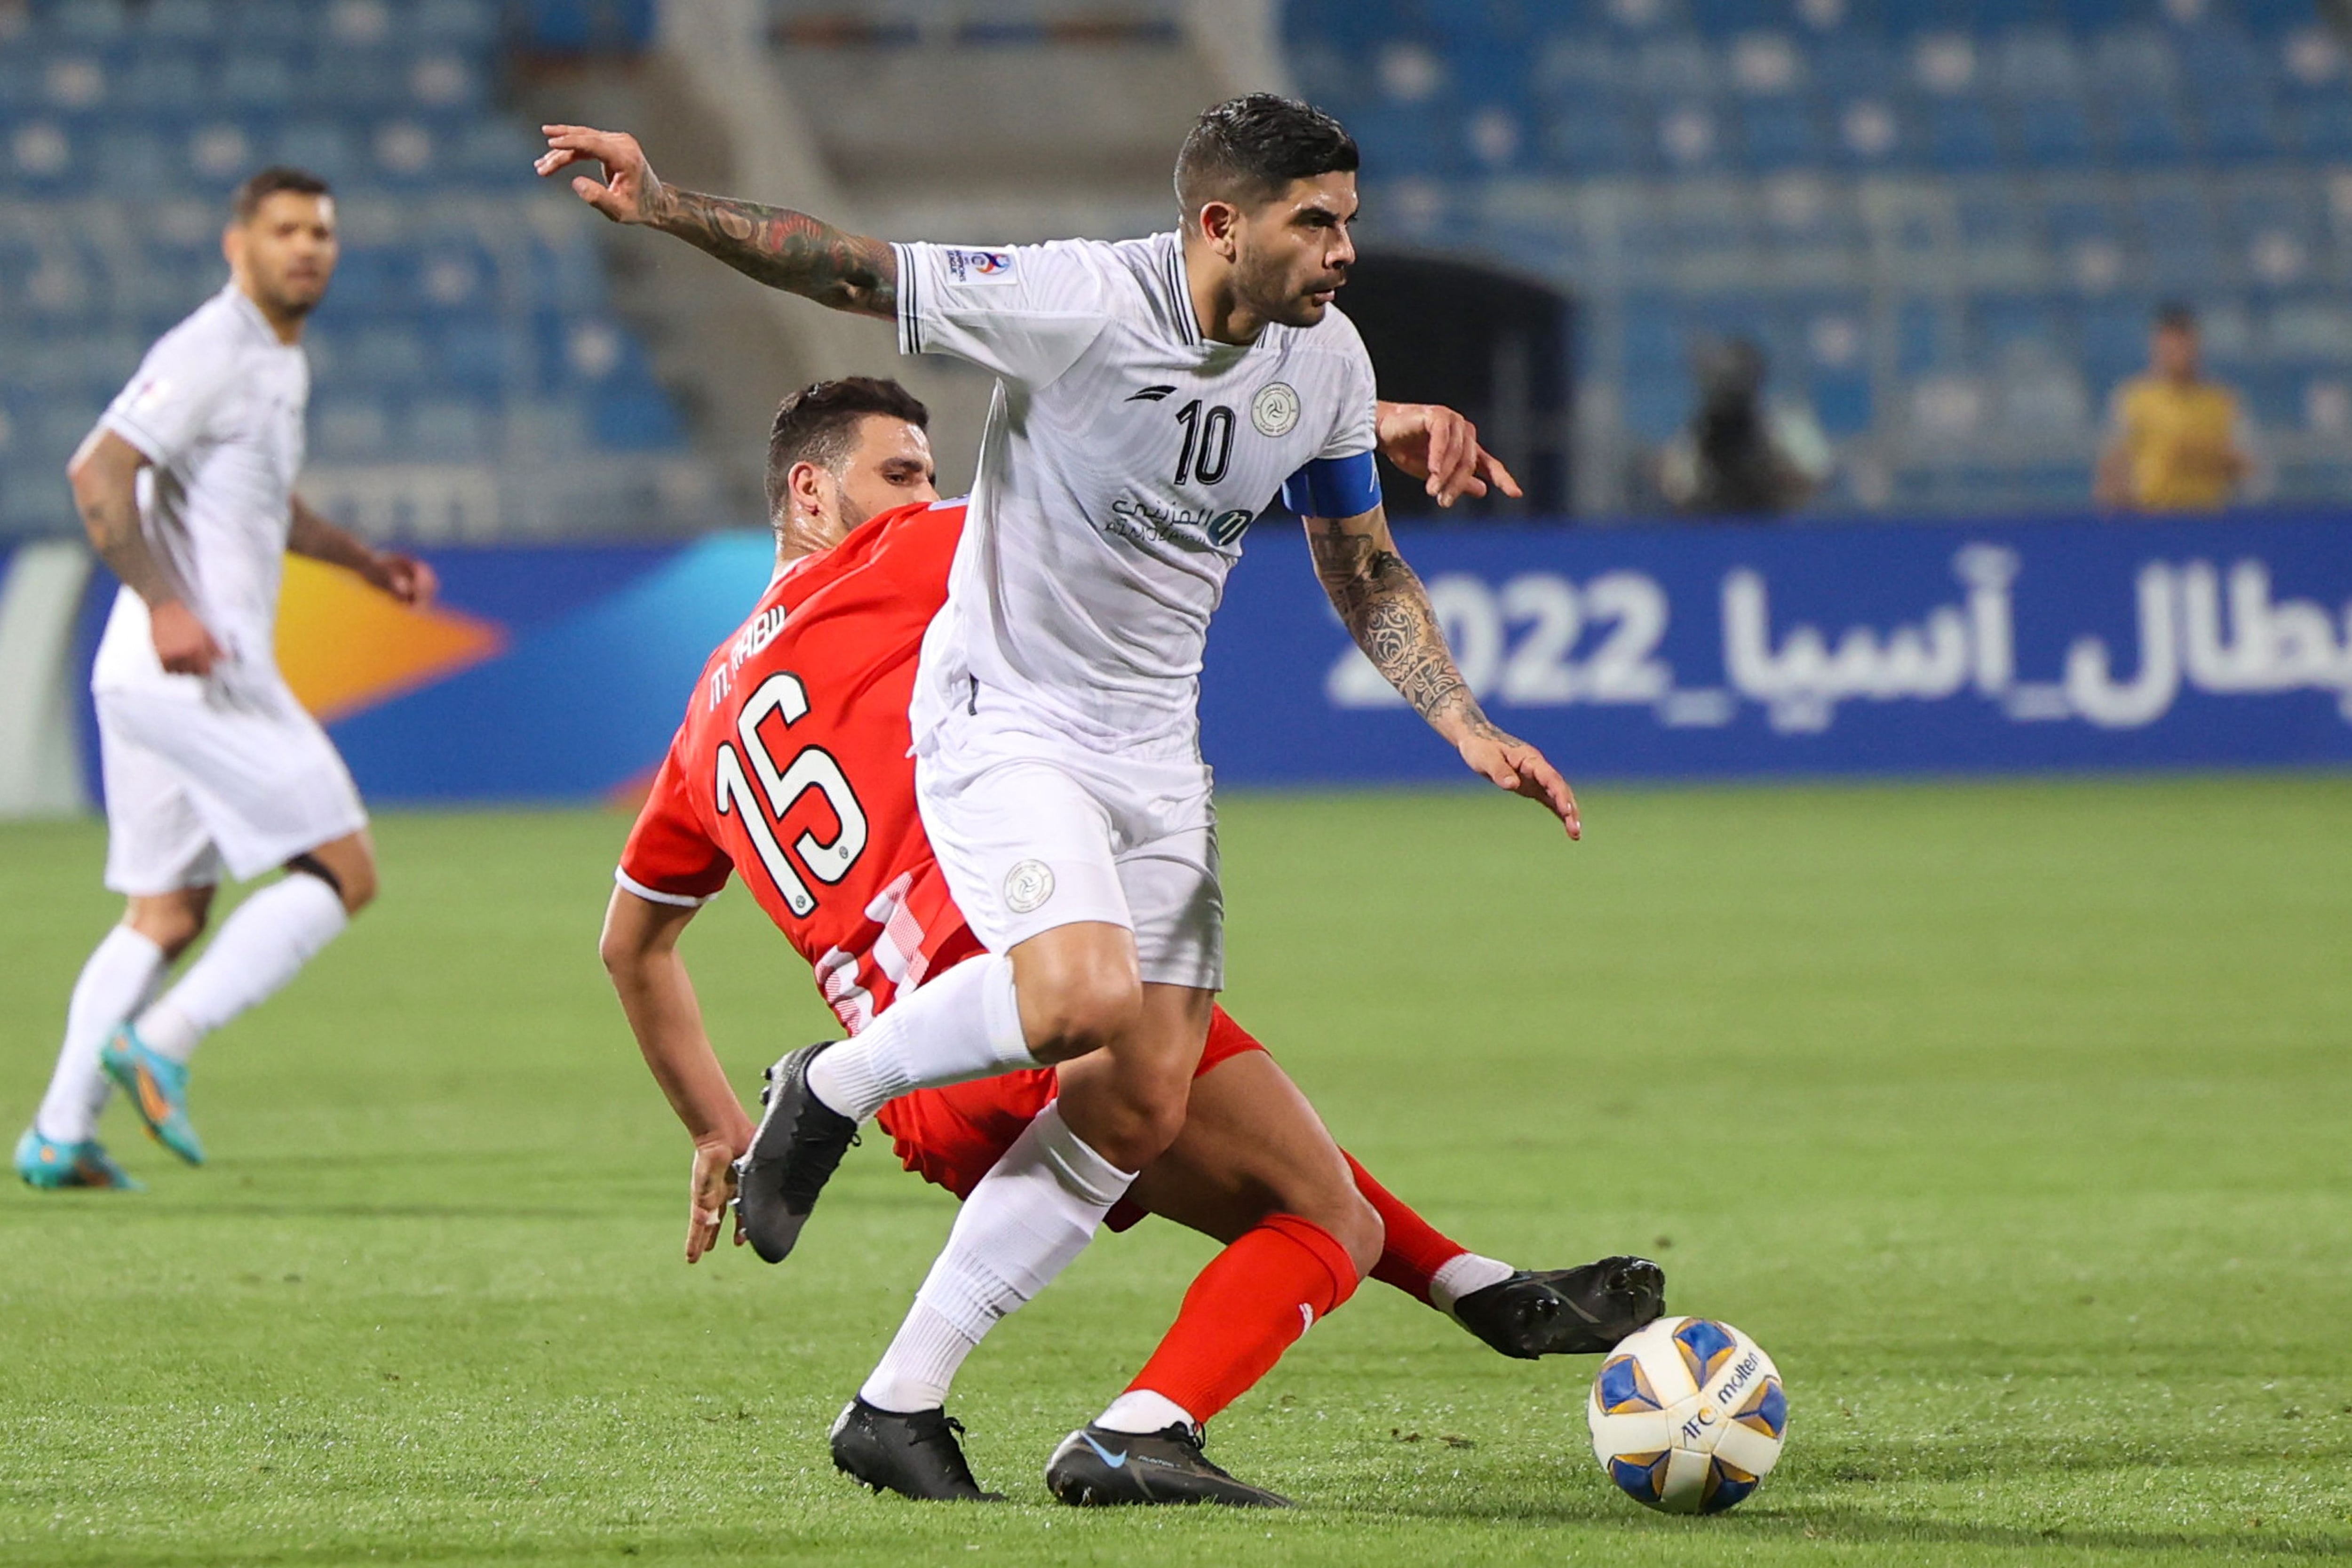 Saudi Pro League 23/24 complete guide: Teams, stars, fixtures